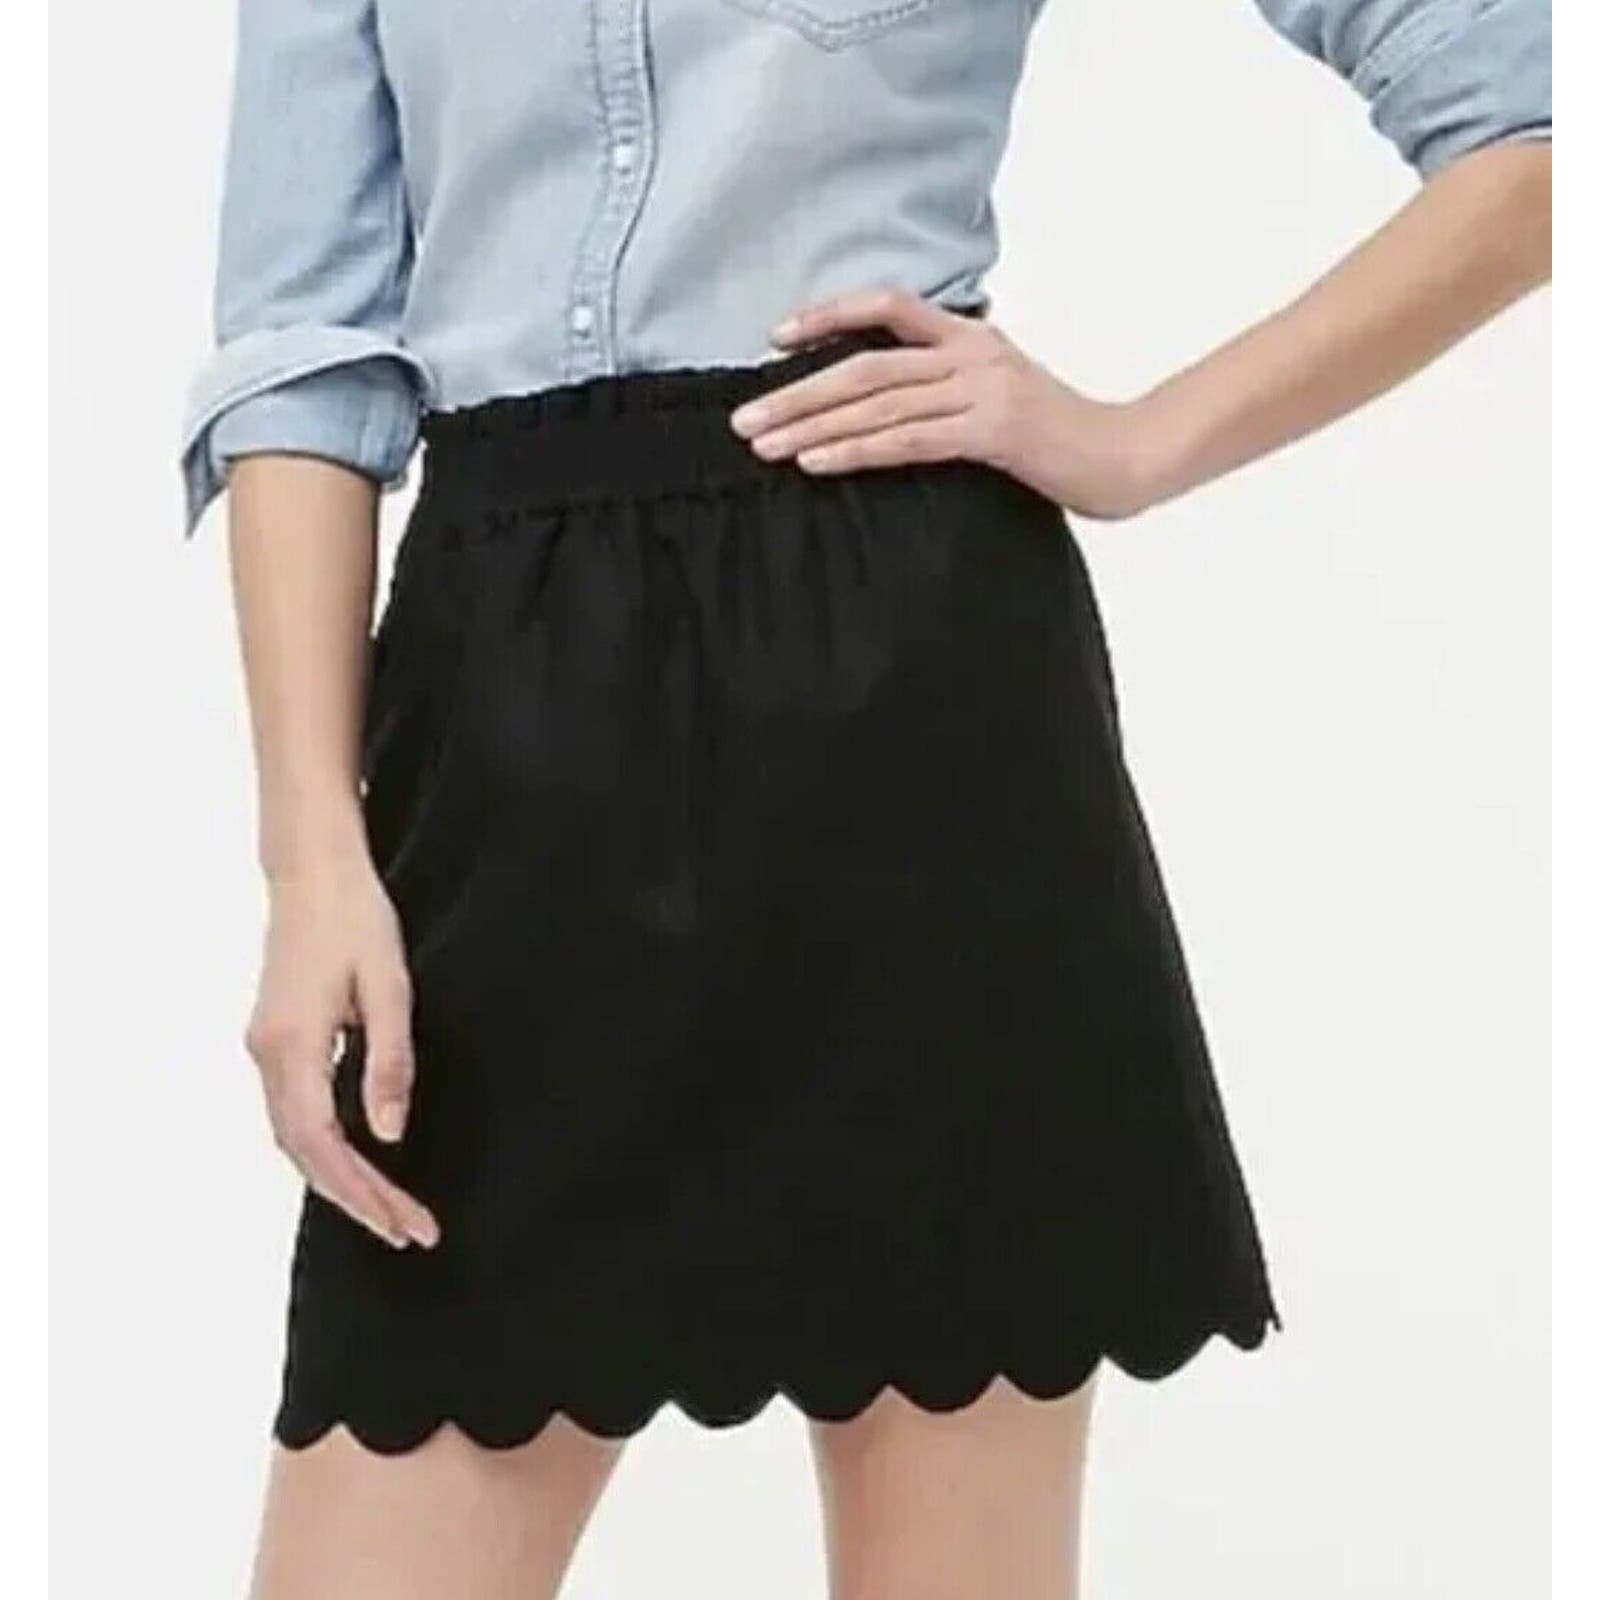 large discount J. Crew Linen Blend Skirt, Black, Size 6